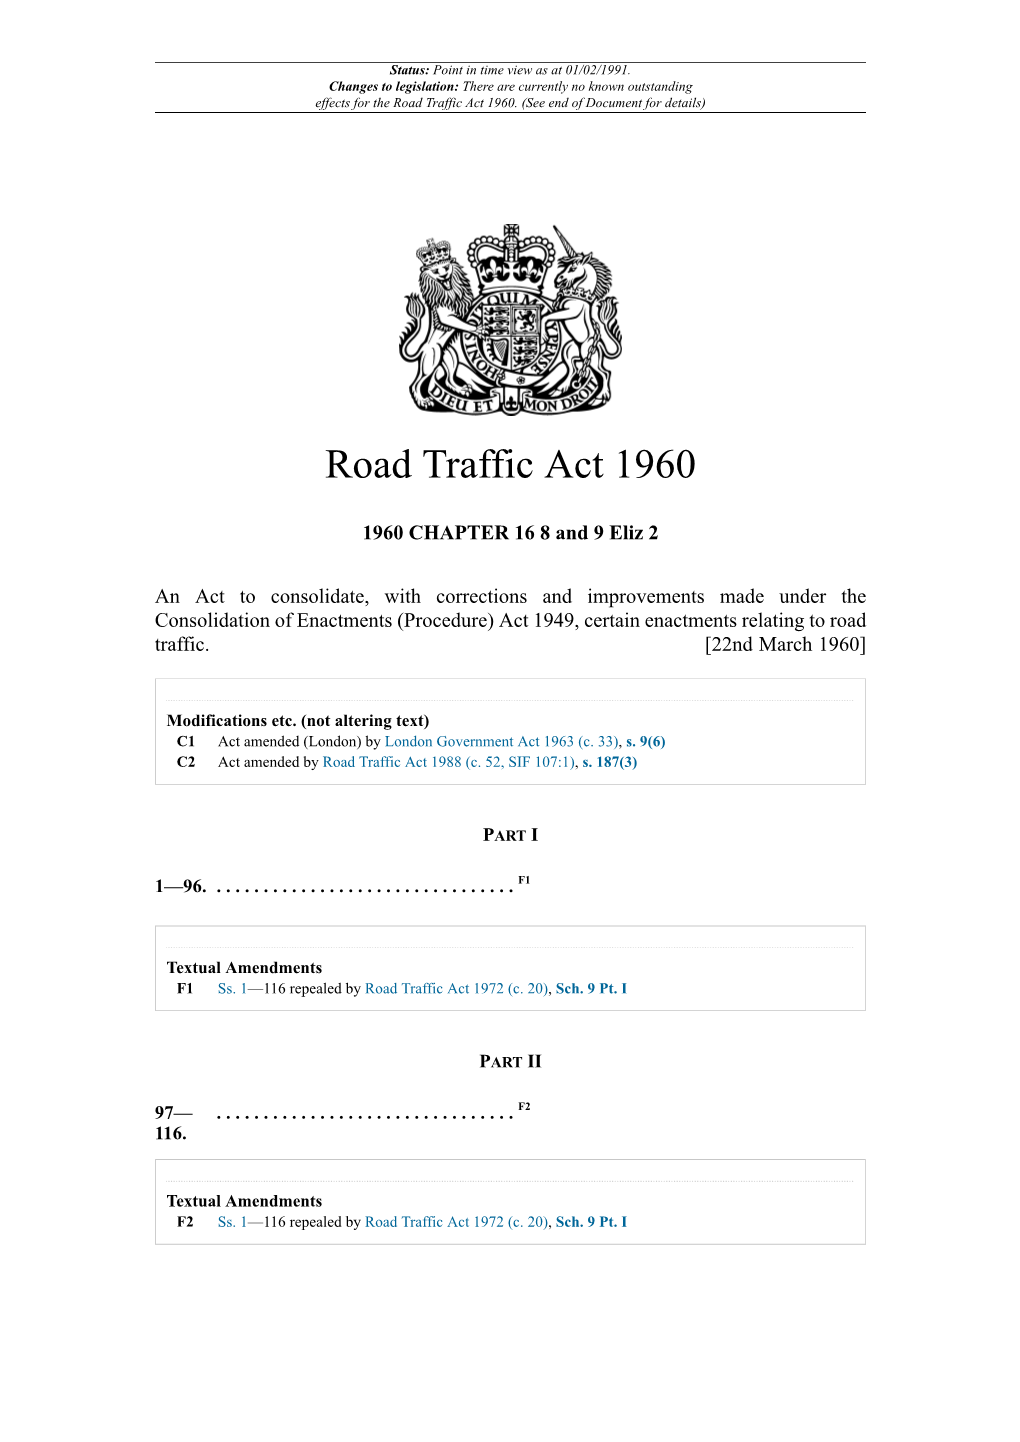 Road Traffic Act 1960